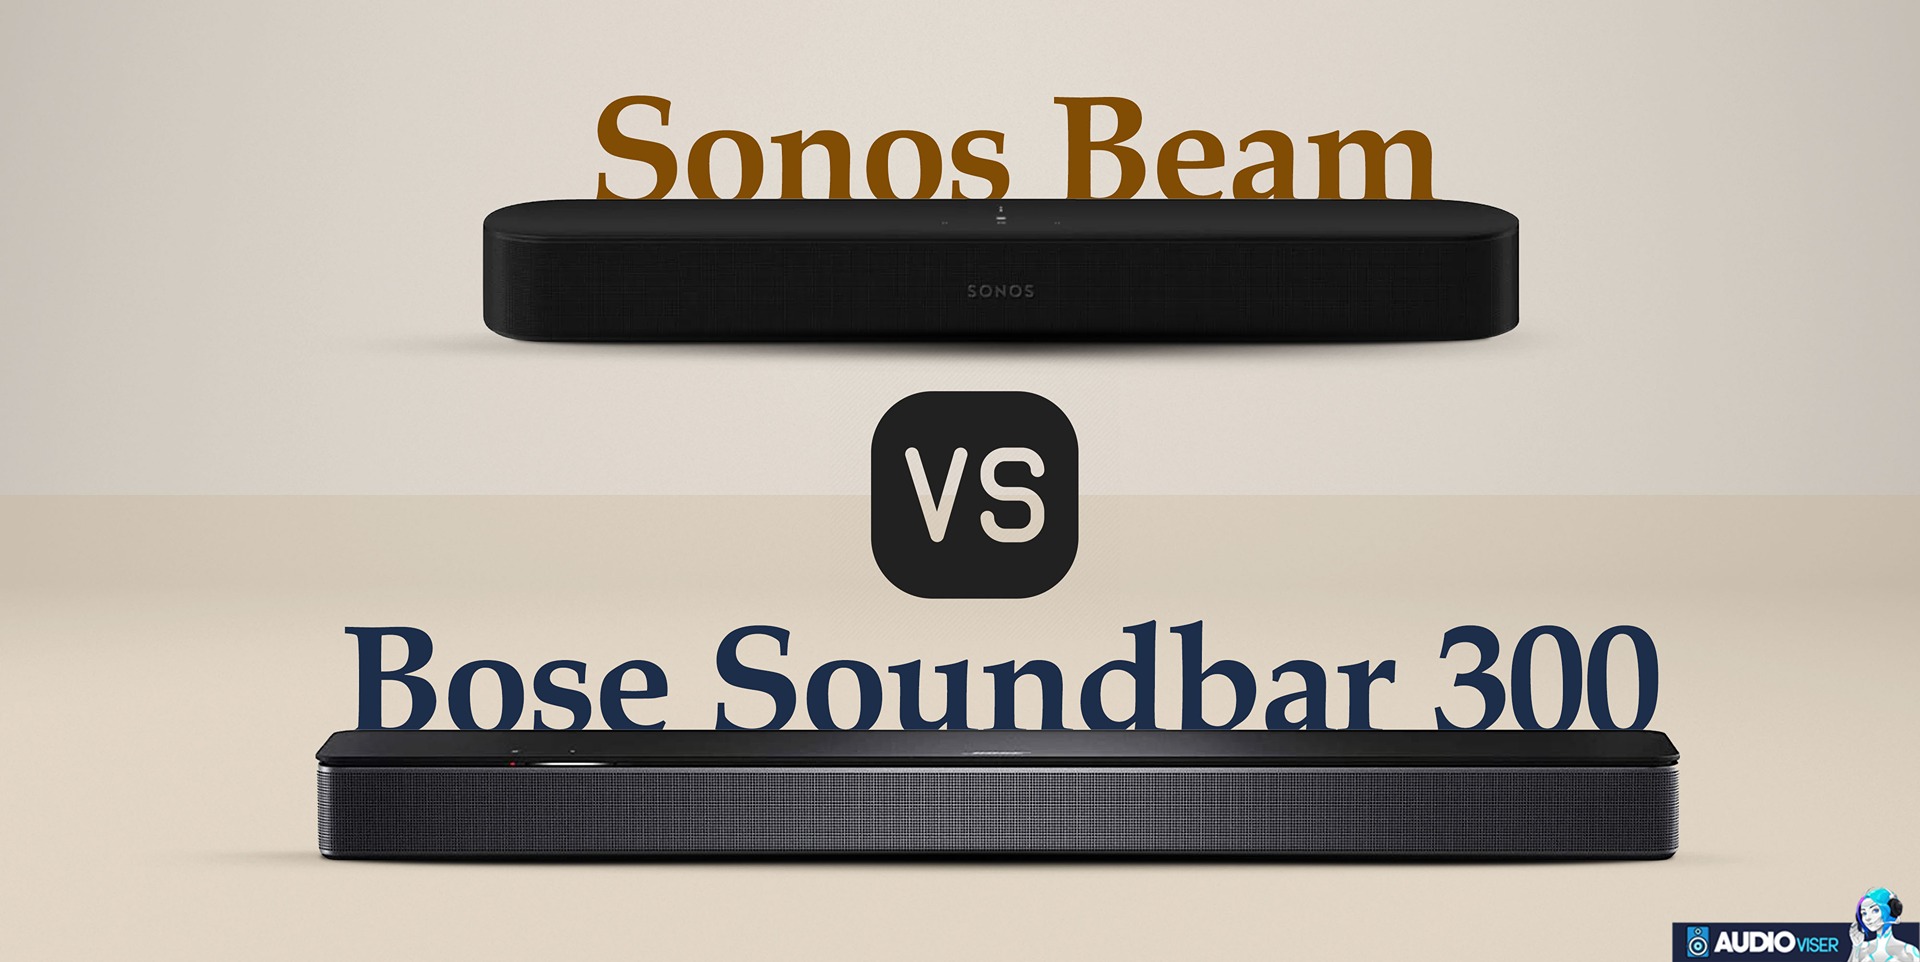 Sonos Beam vs Bose Soundbar 300: Which One?